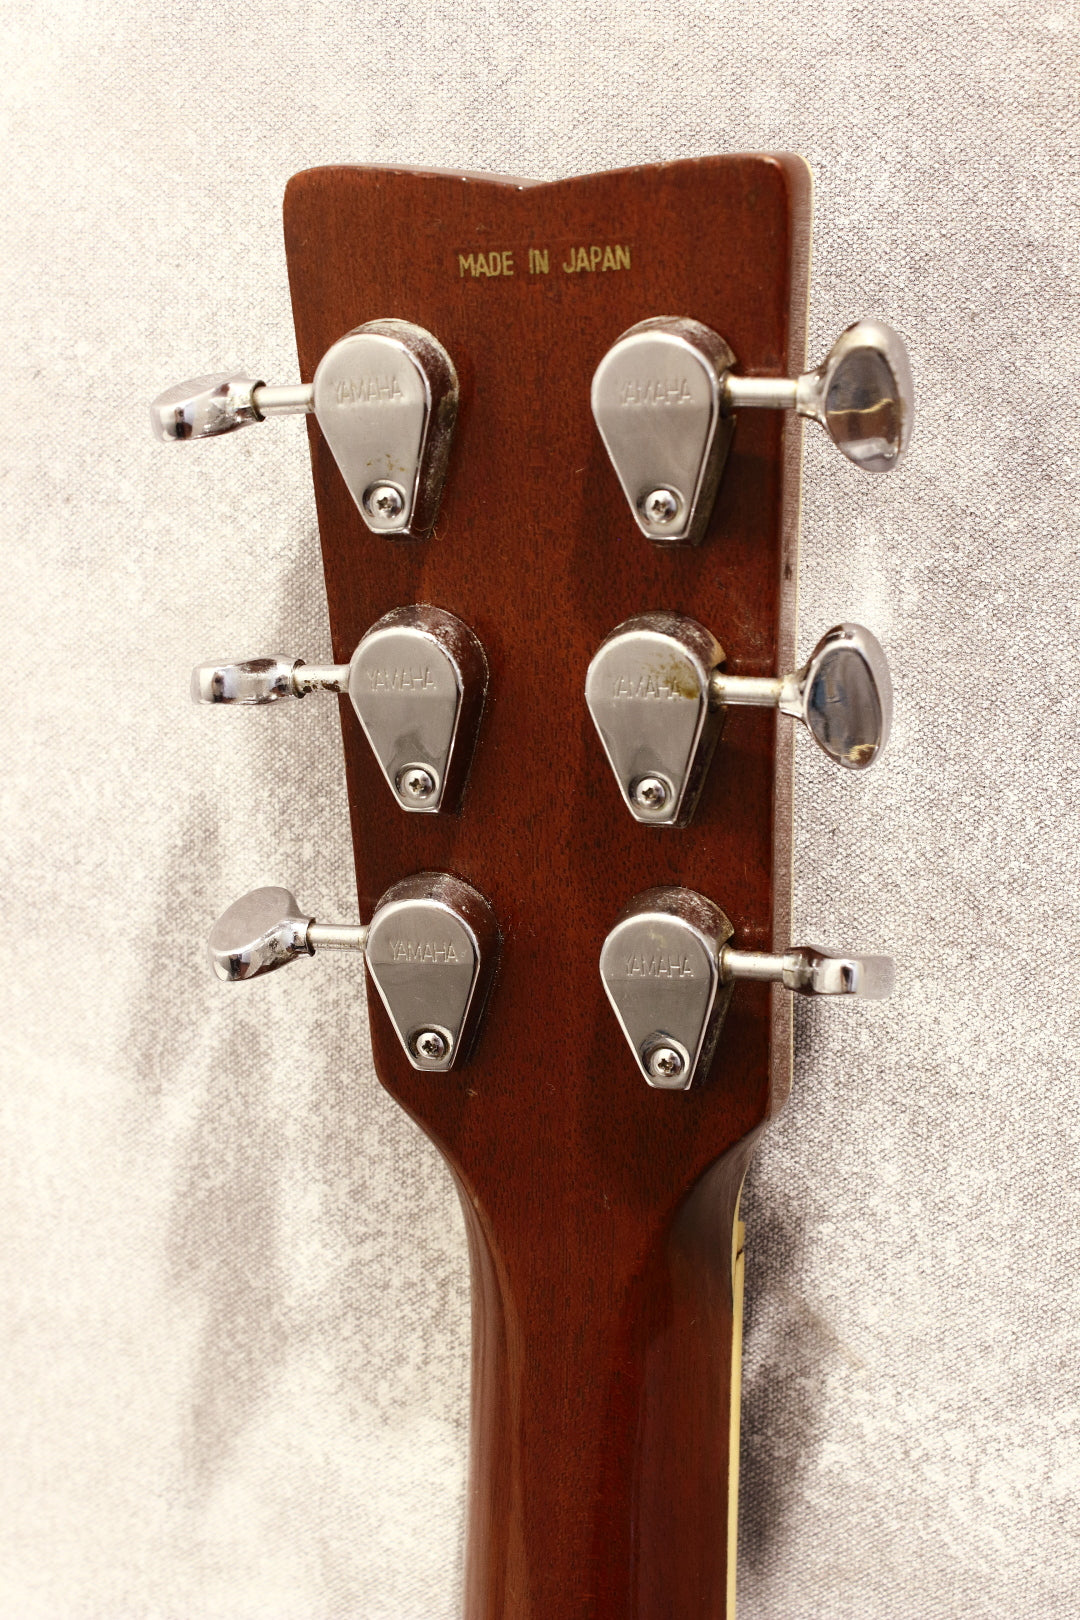 Yamaha FG-300 Jumbo Acoustic 1968